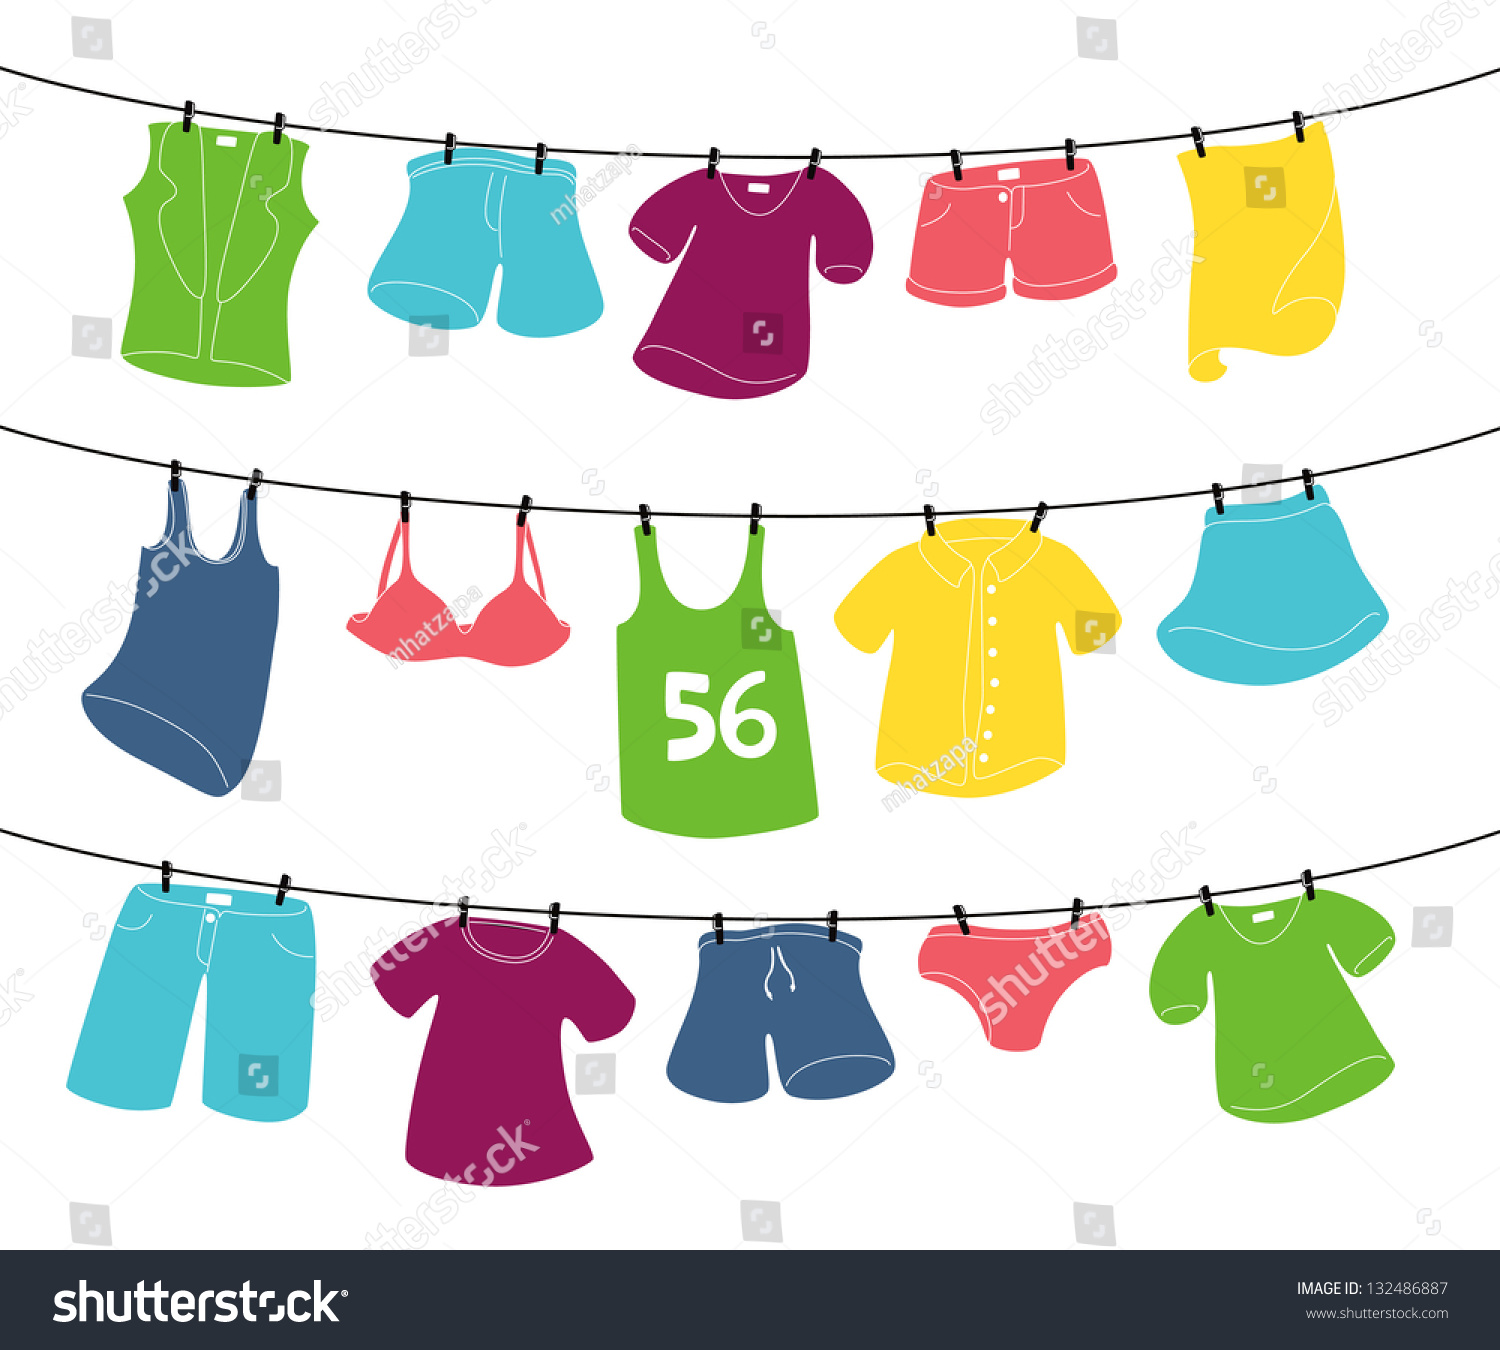 clothesline clipart free - photo #21